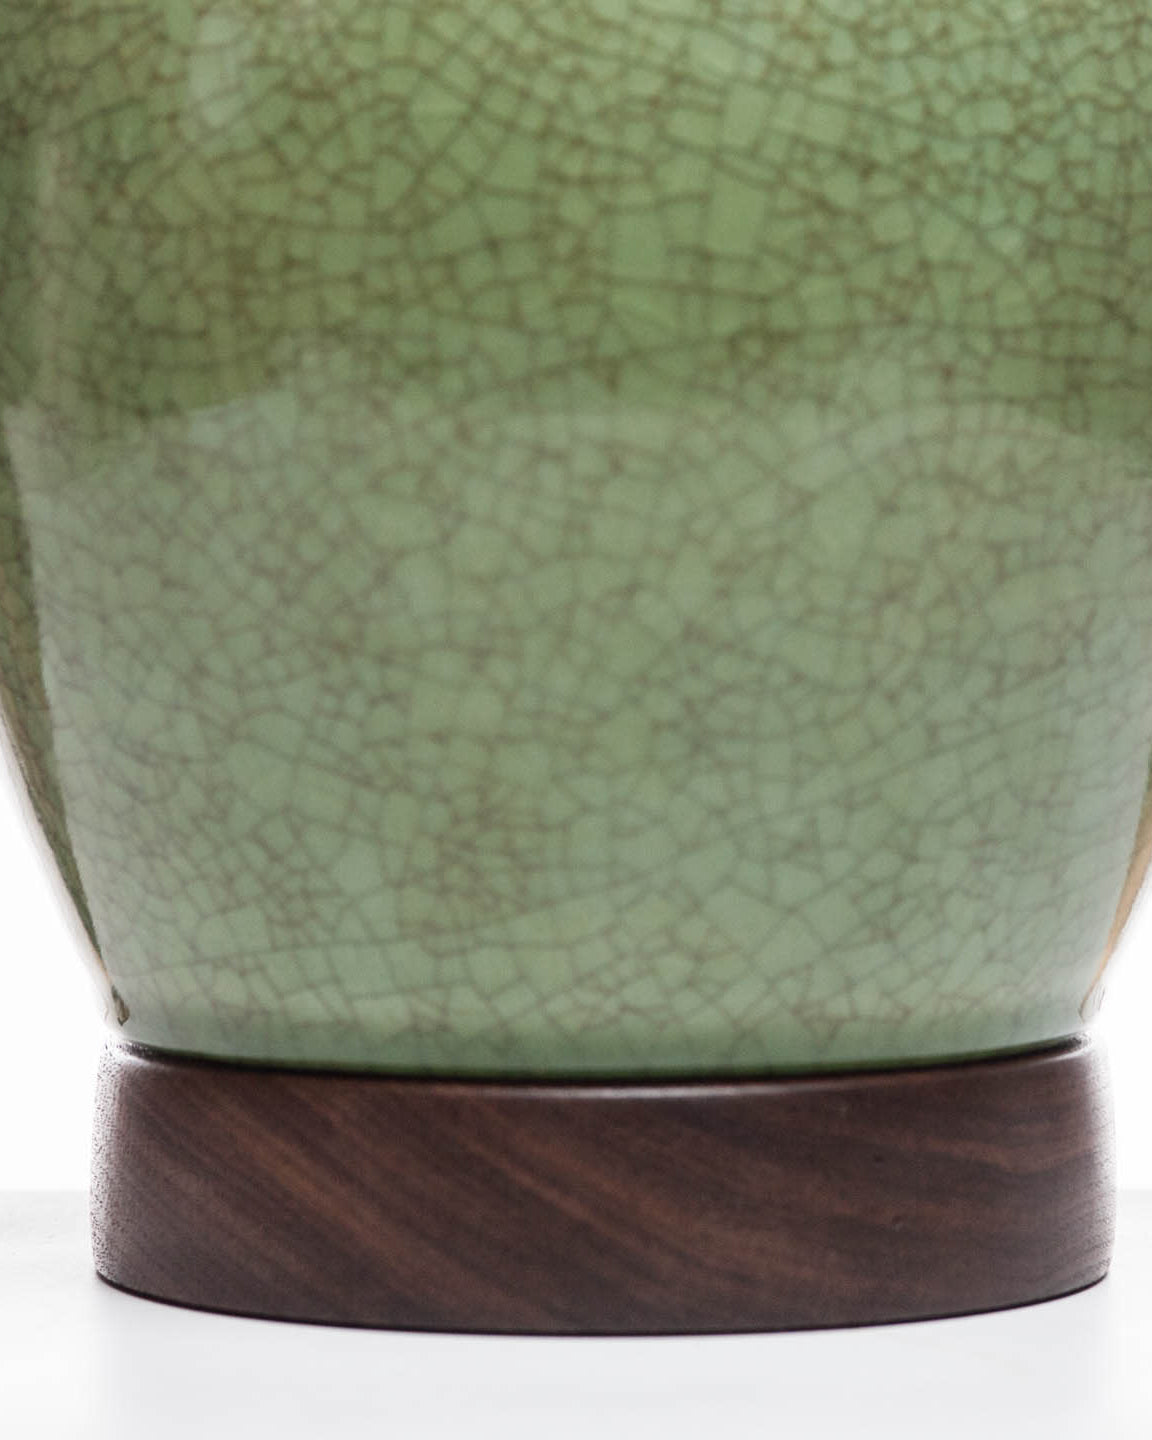 Lawrence & Scott Scarlett Porcelain Table Lamp in Celadon Crackle